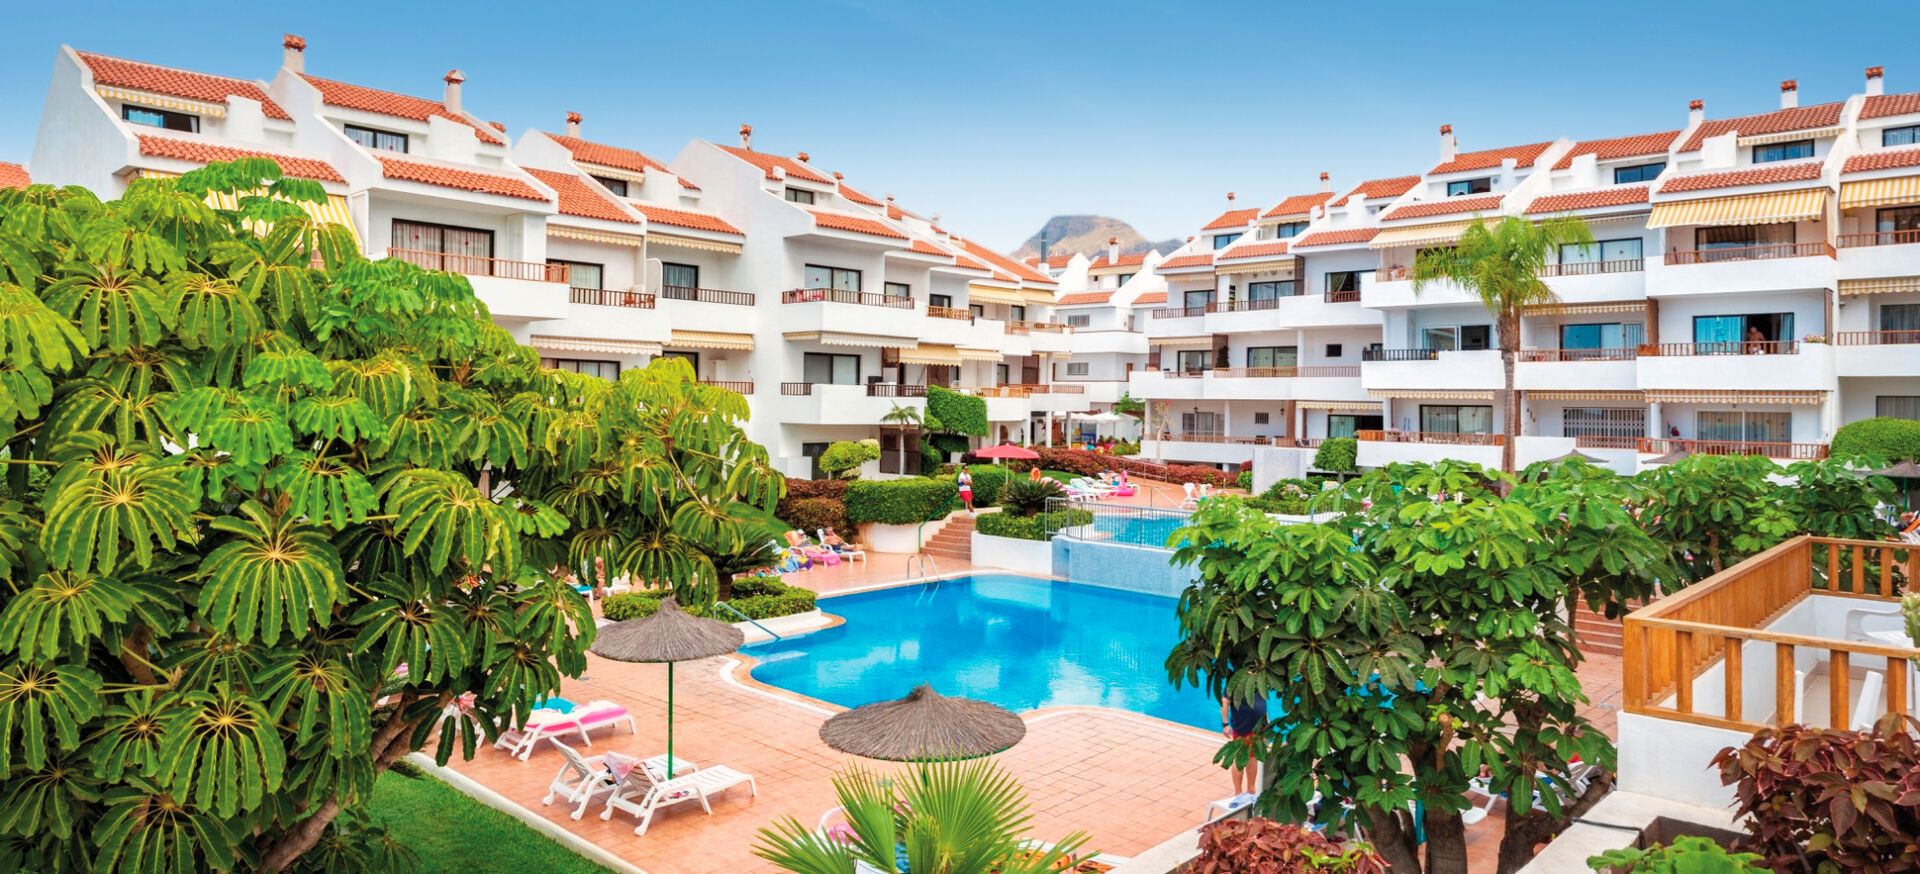 Canaries - Tenerife - Espagne - Aparthotel HG Cristian Sur 3*